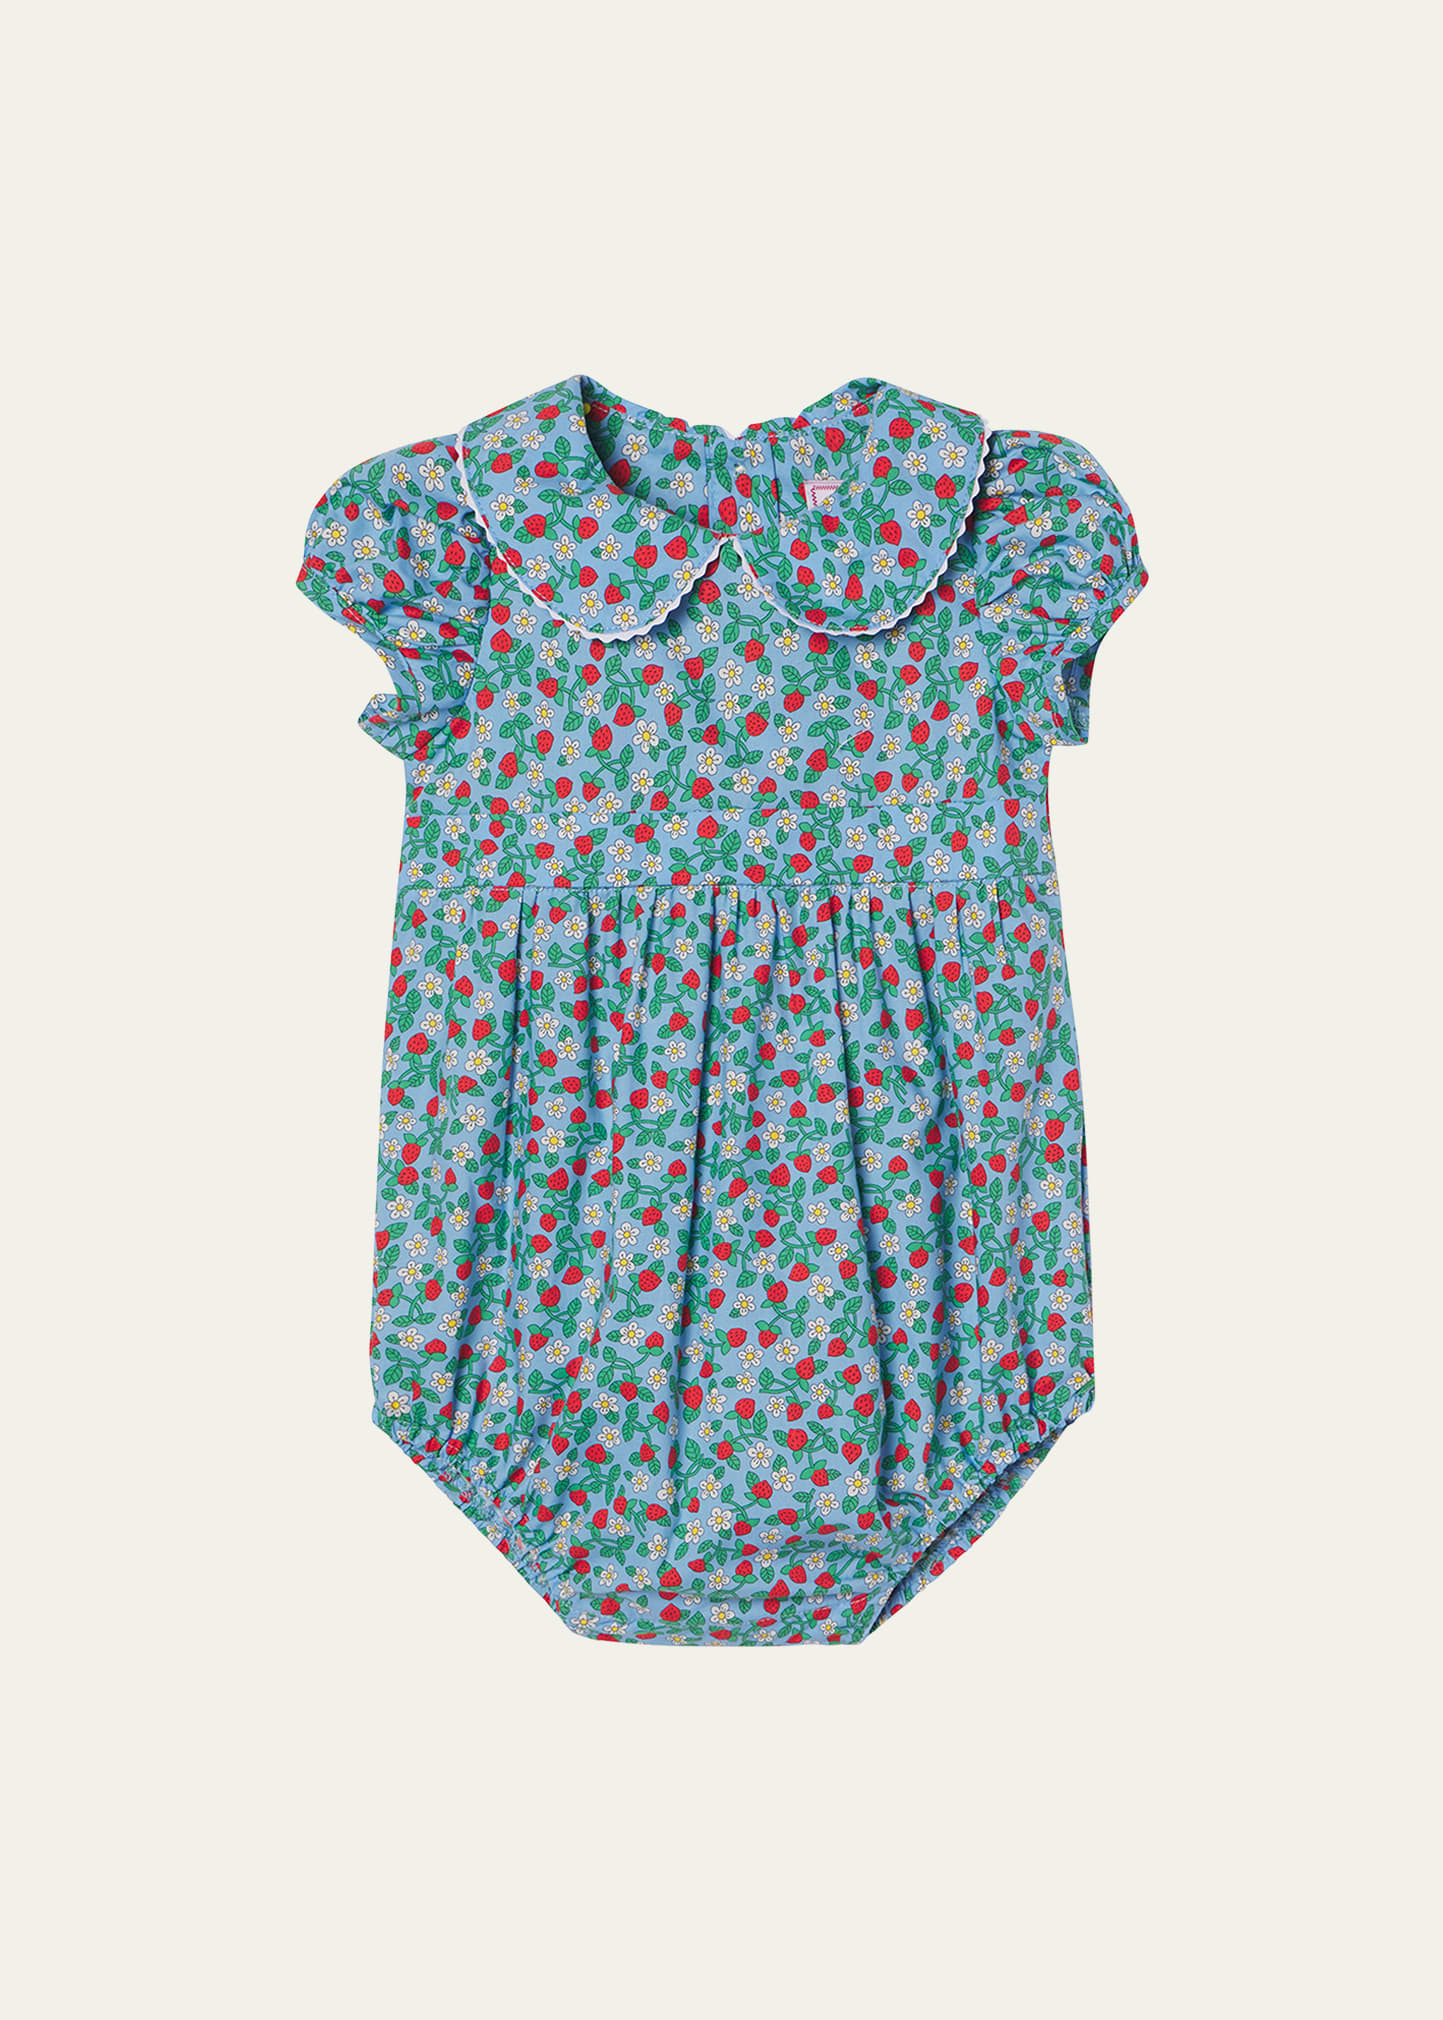 Classic Prep Childrenswear Girl's Juniper Srtawberry-Print Bubble Romper, Size Newborn-24M